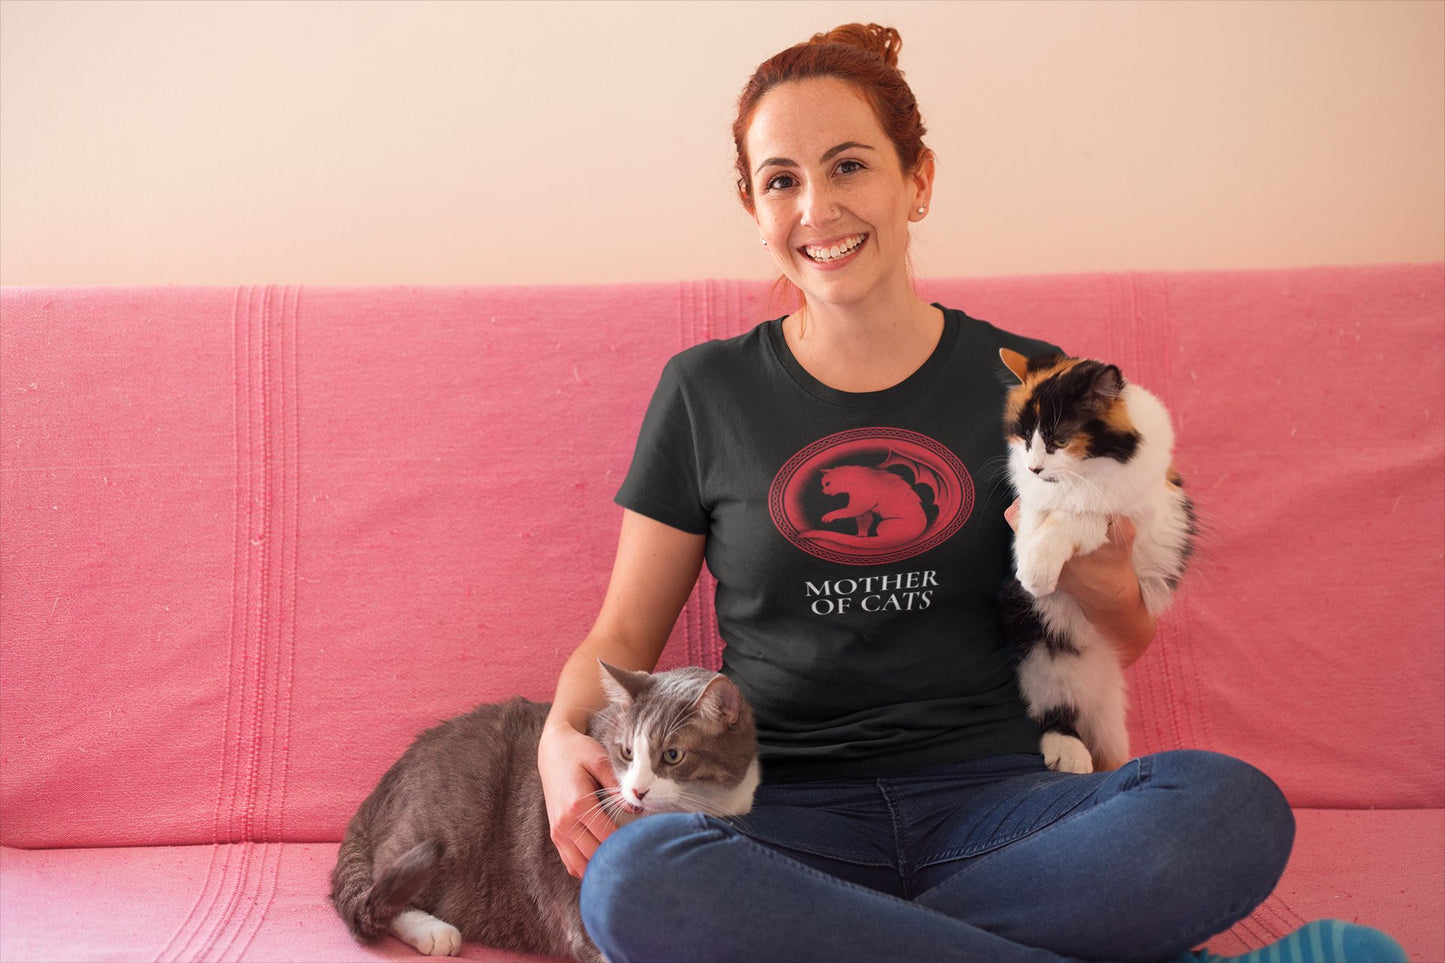 CrazyYetiClothing, CYC, Mother Of Cats (Unisex Tee), T-Shirt